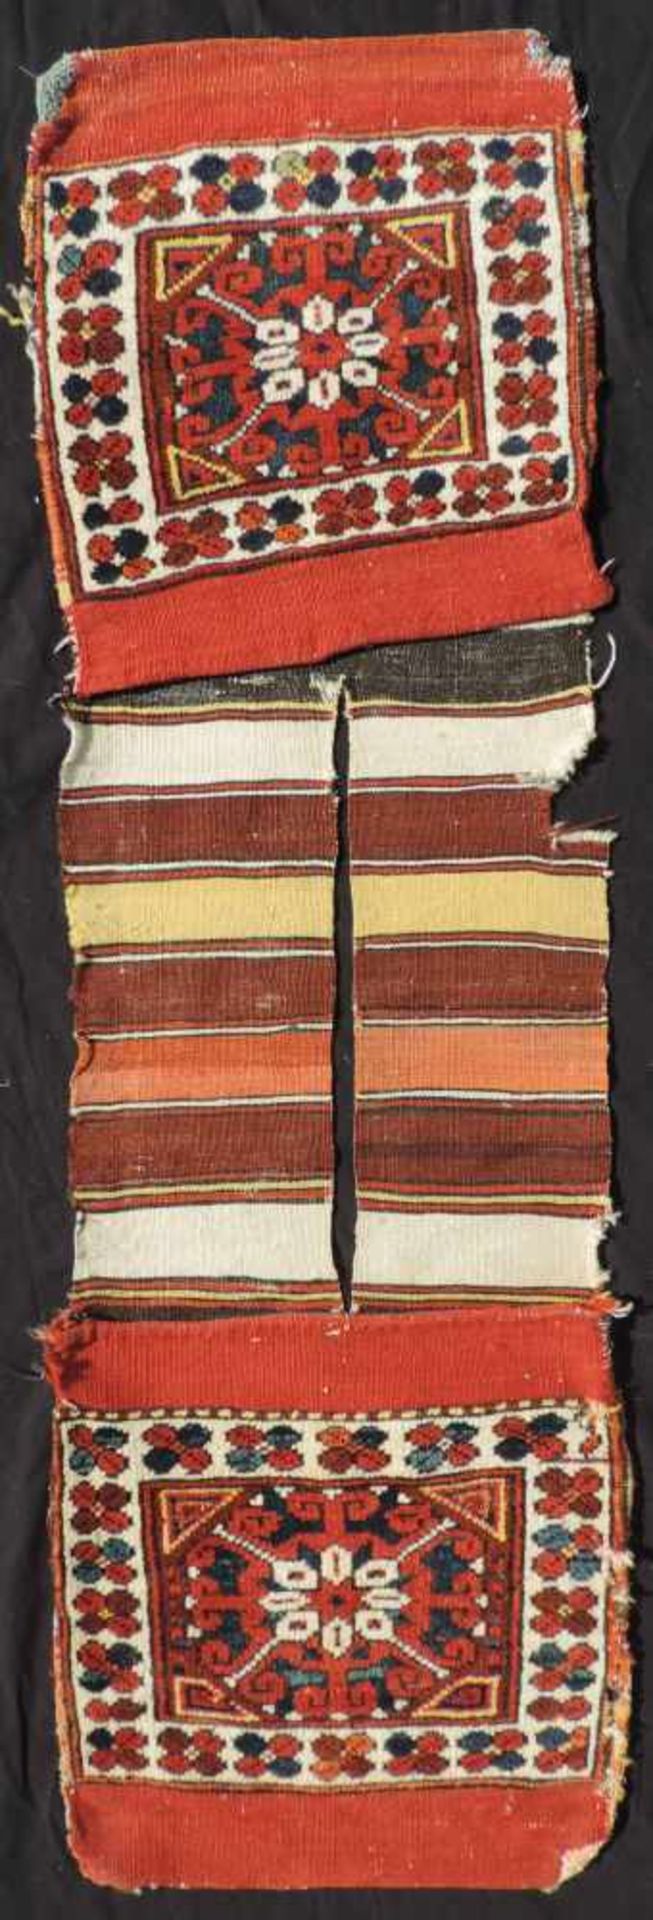 Bergama Hybe tribal rug. Double bag. Turkey. Antique, 19th century.